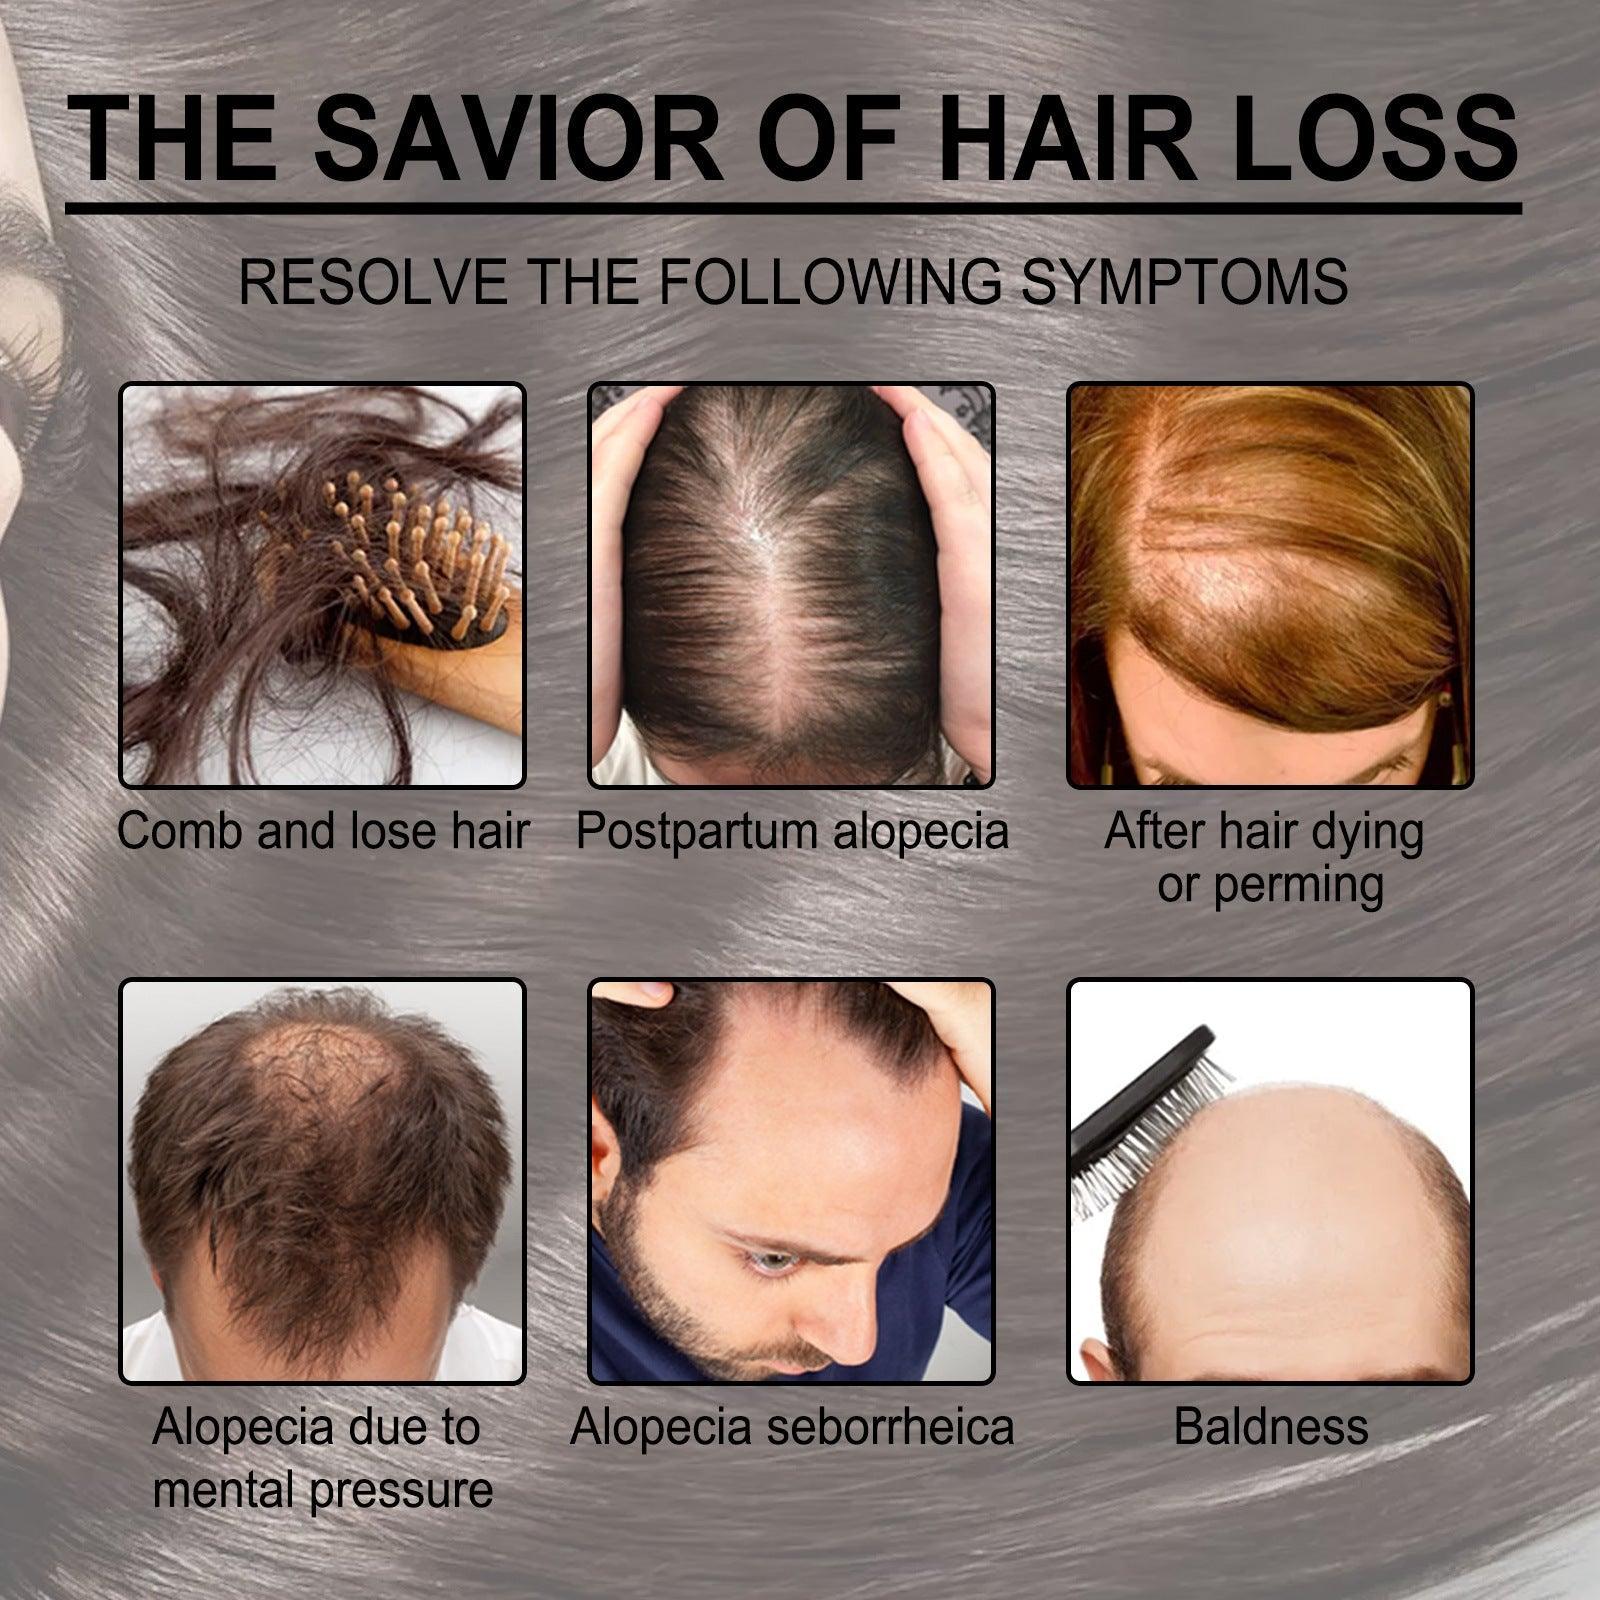 Rosemary Baby Hair Growth + Anti-Breakage Nourishing Essential Oil Hair 30ML EELHOE COSMETICS 30ml